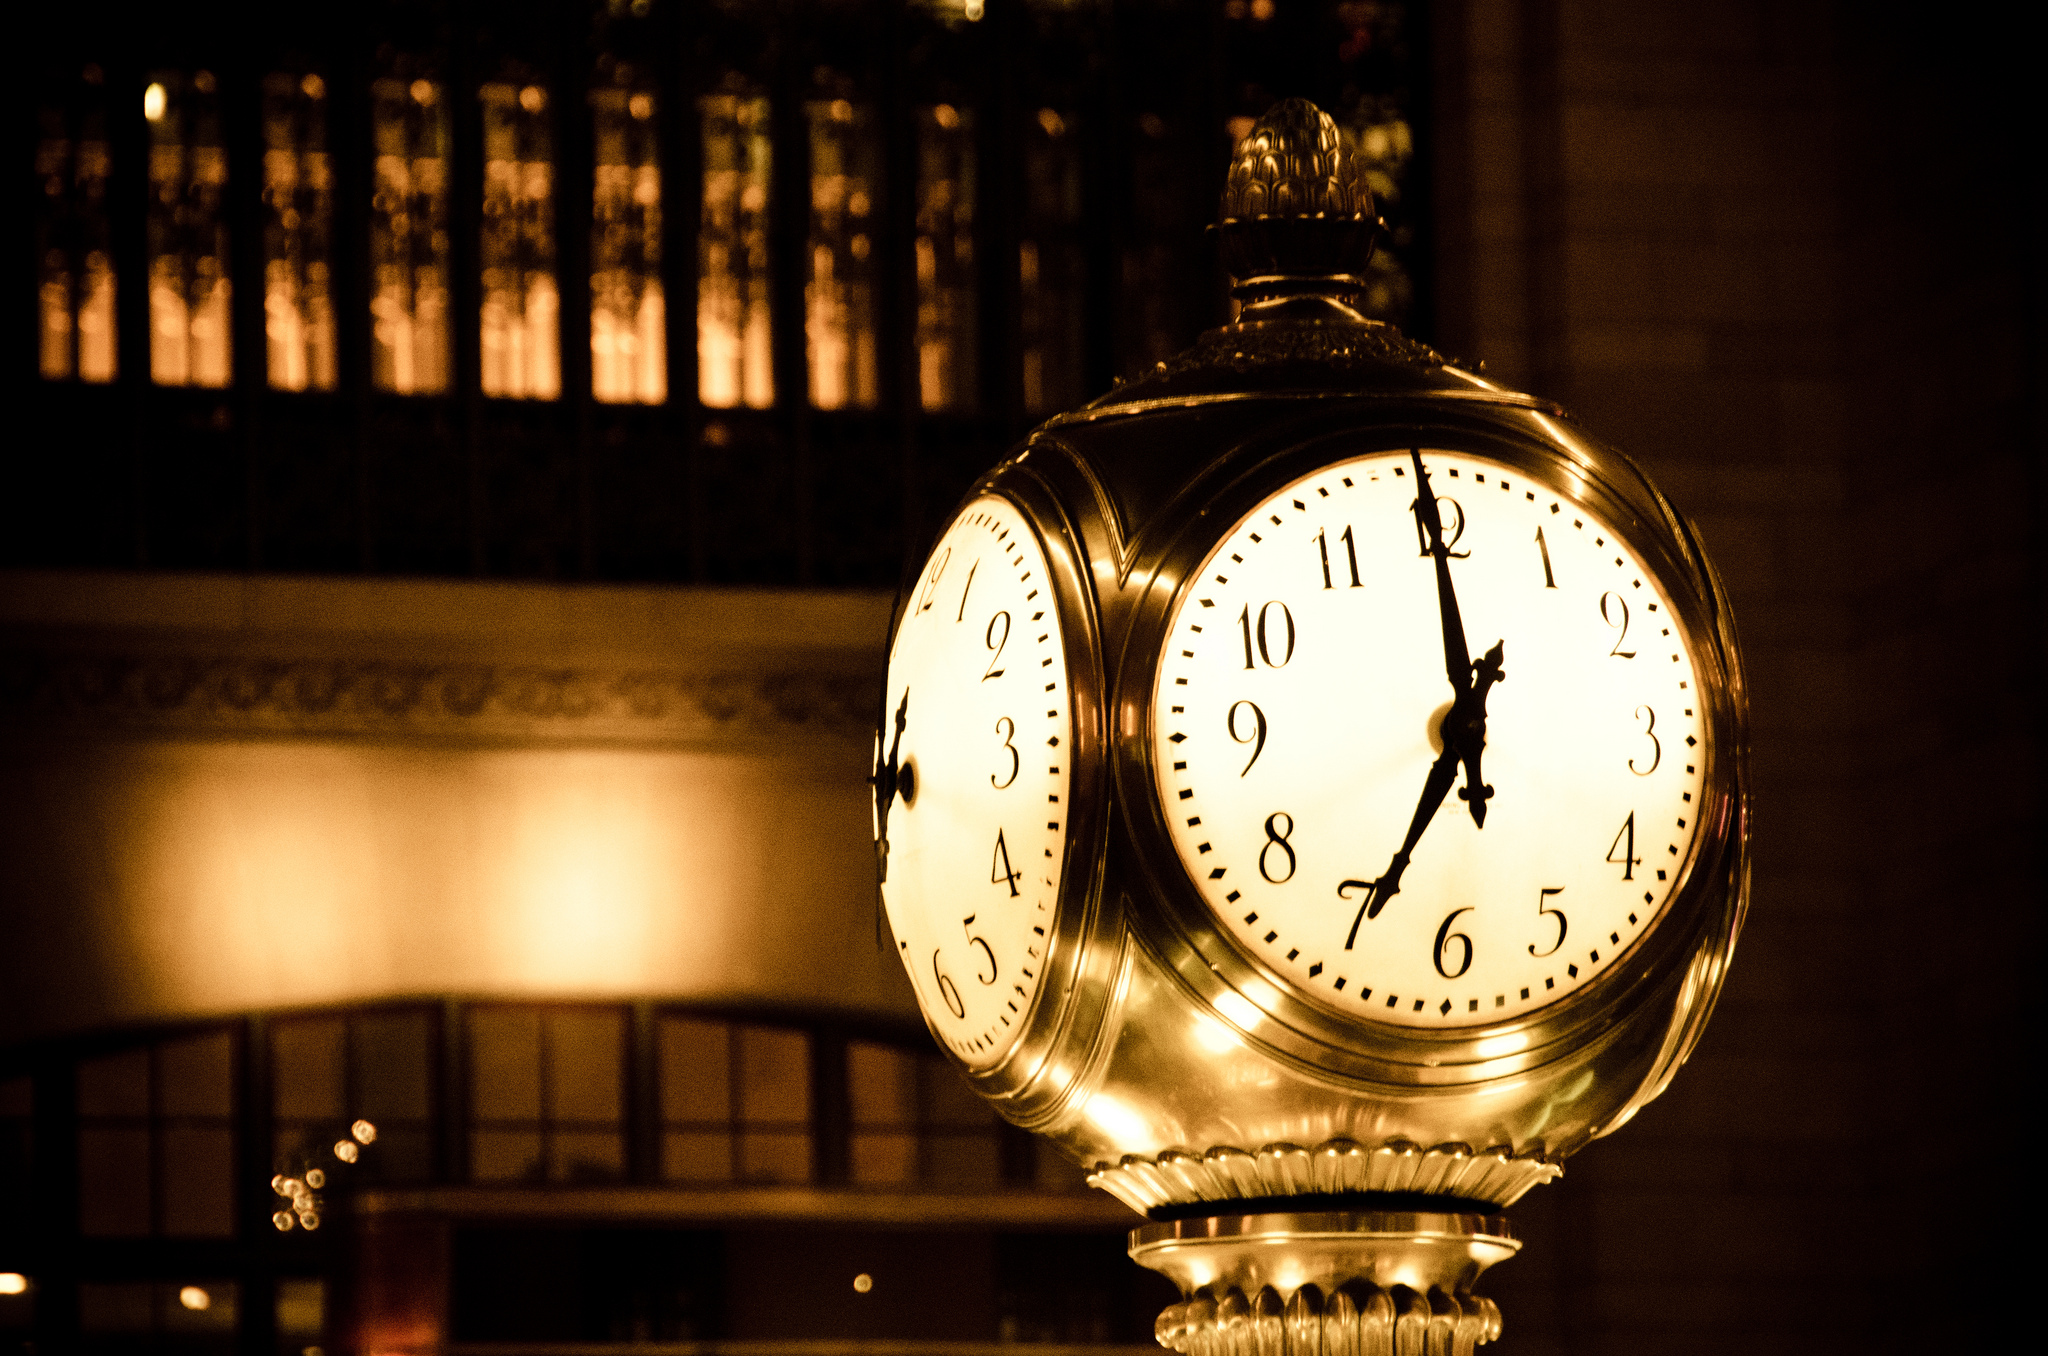 Train station clock